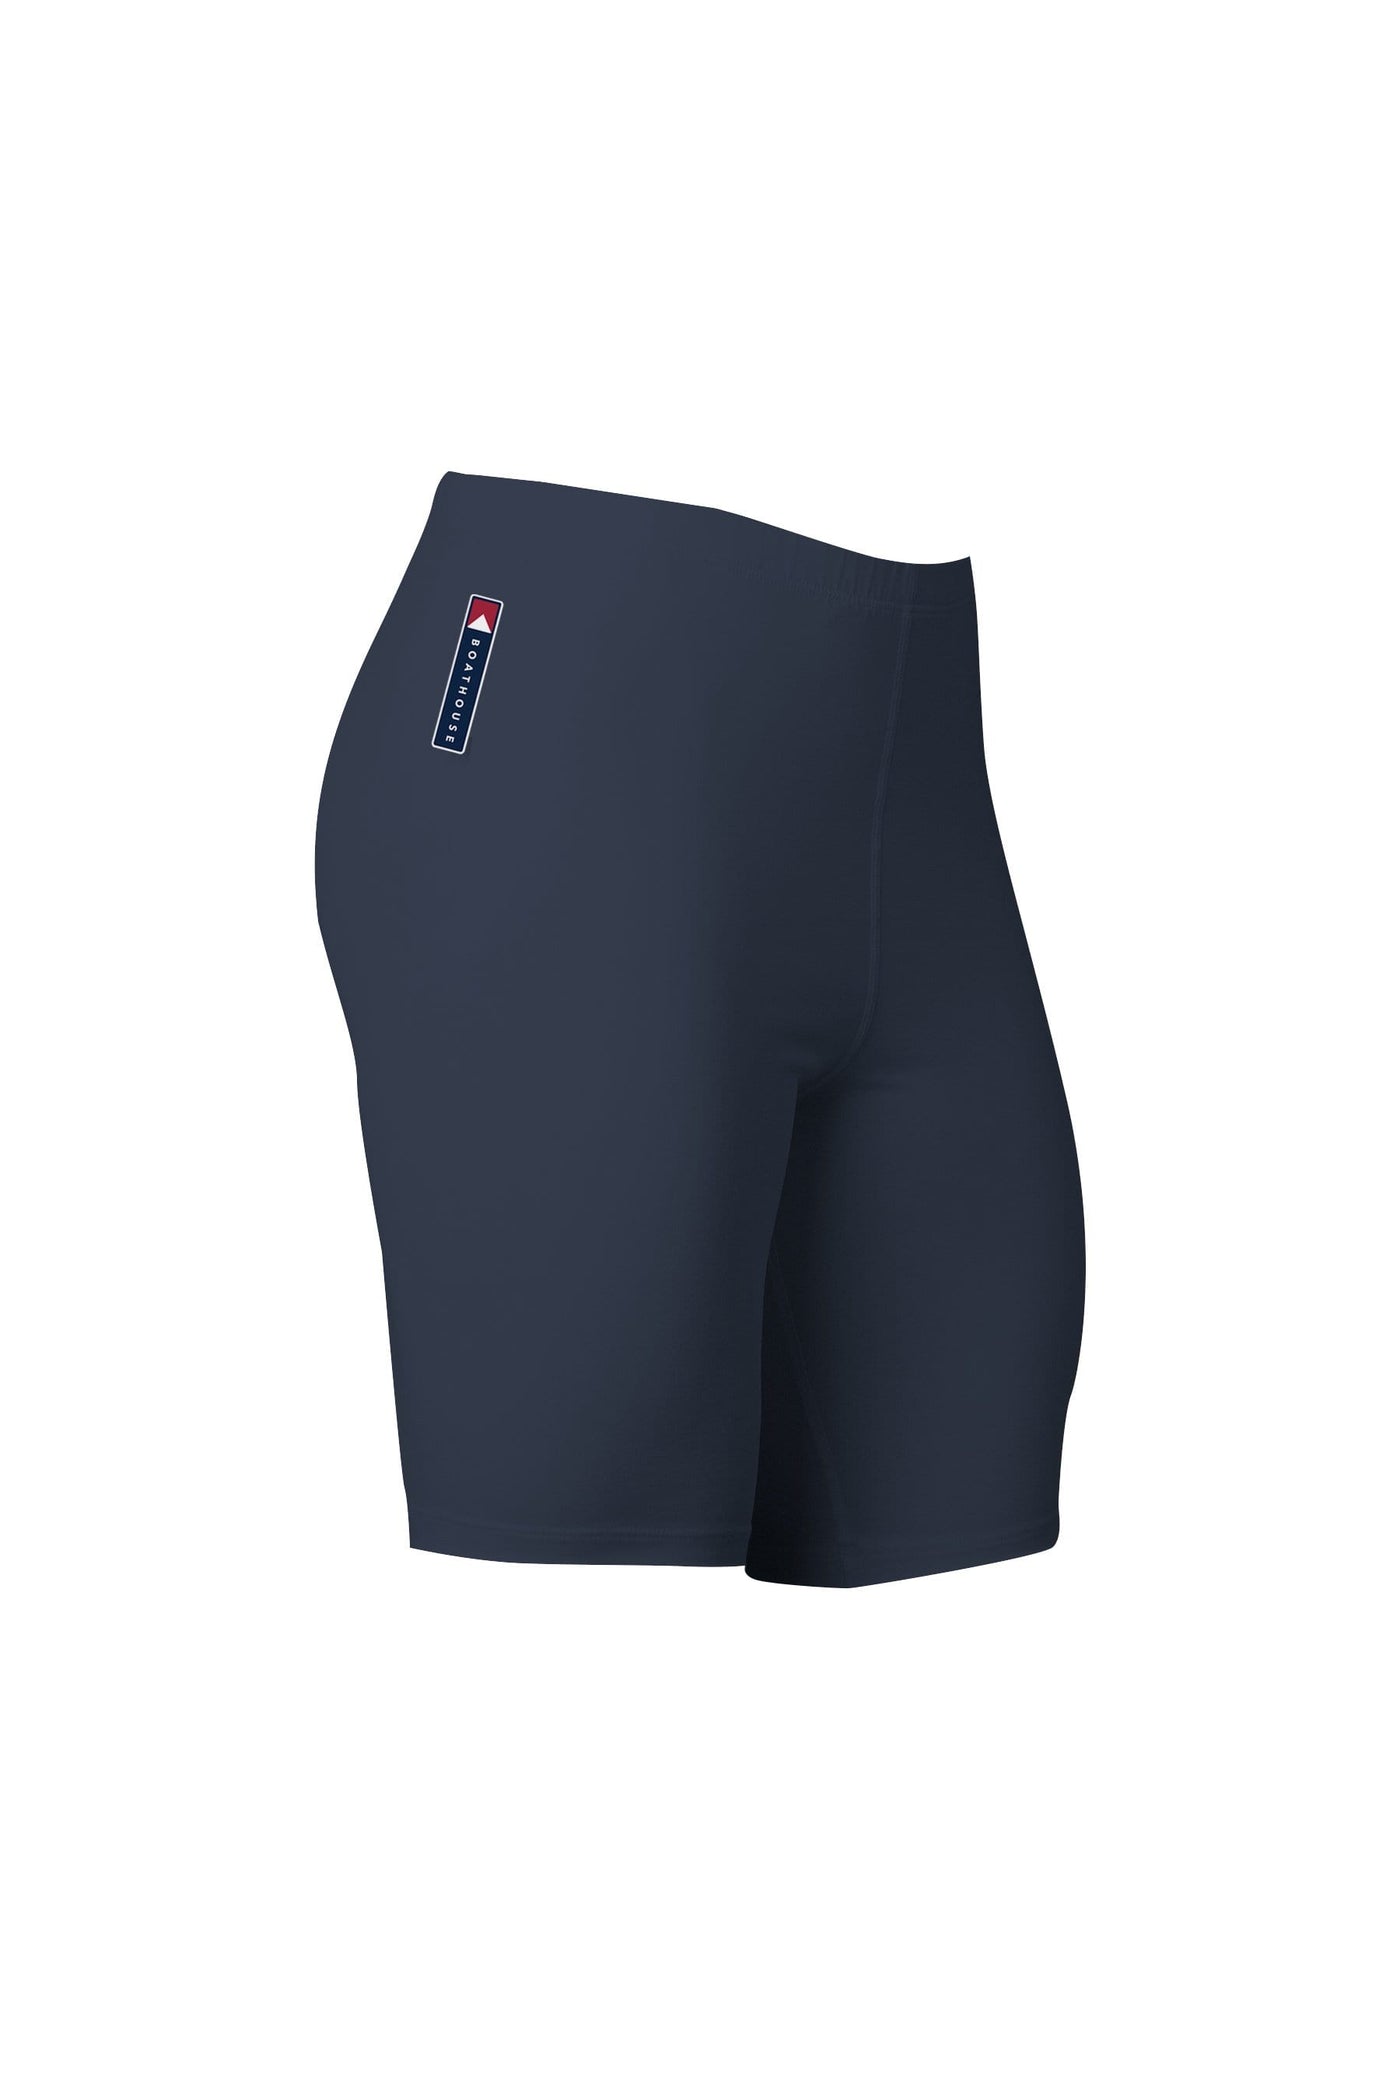 Men's Shorts  Compression Shorts Men - The Marena Group, LLC